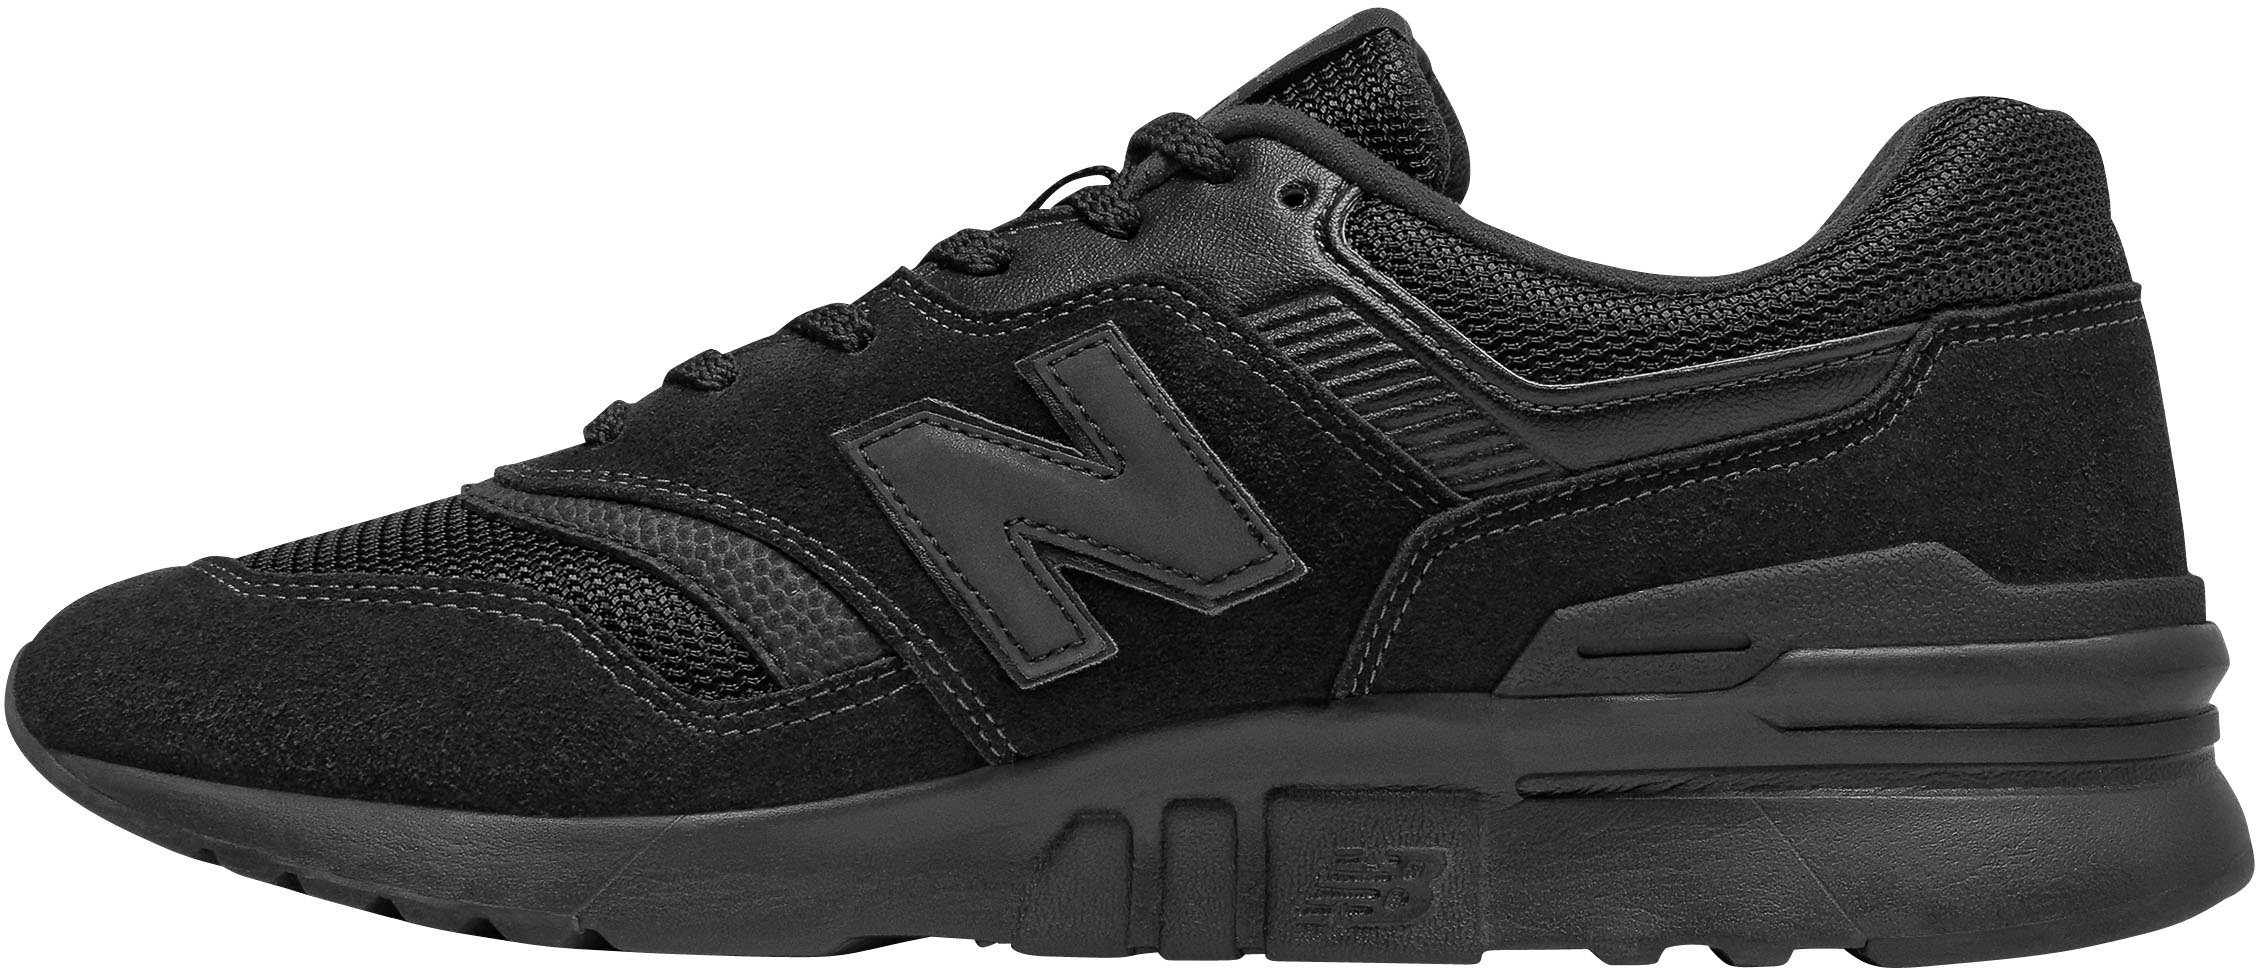 CM Sneaker 997 Balance New schwarz